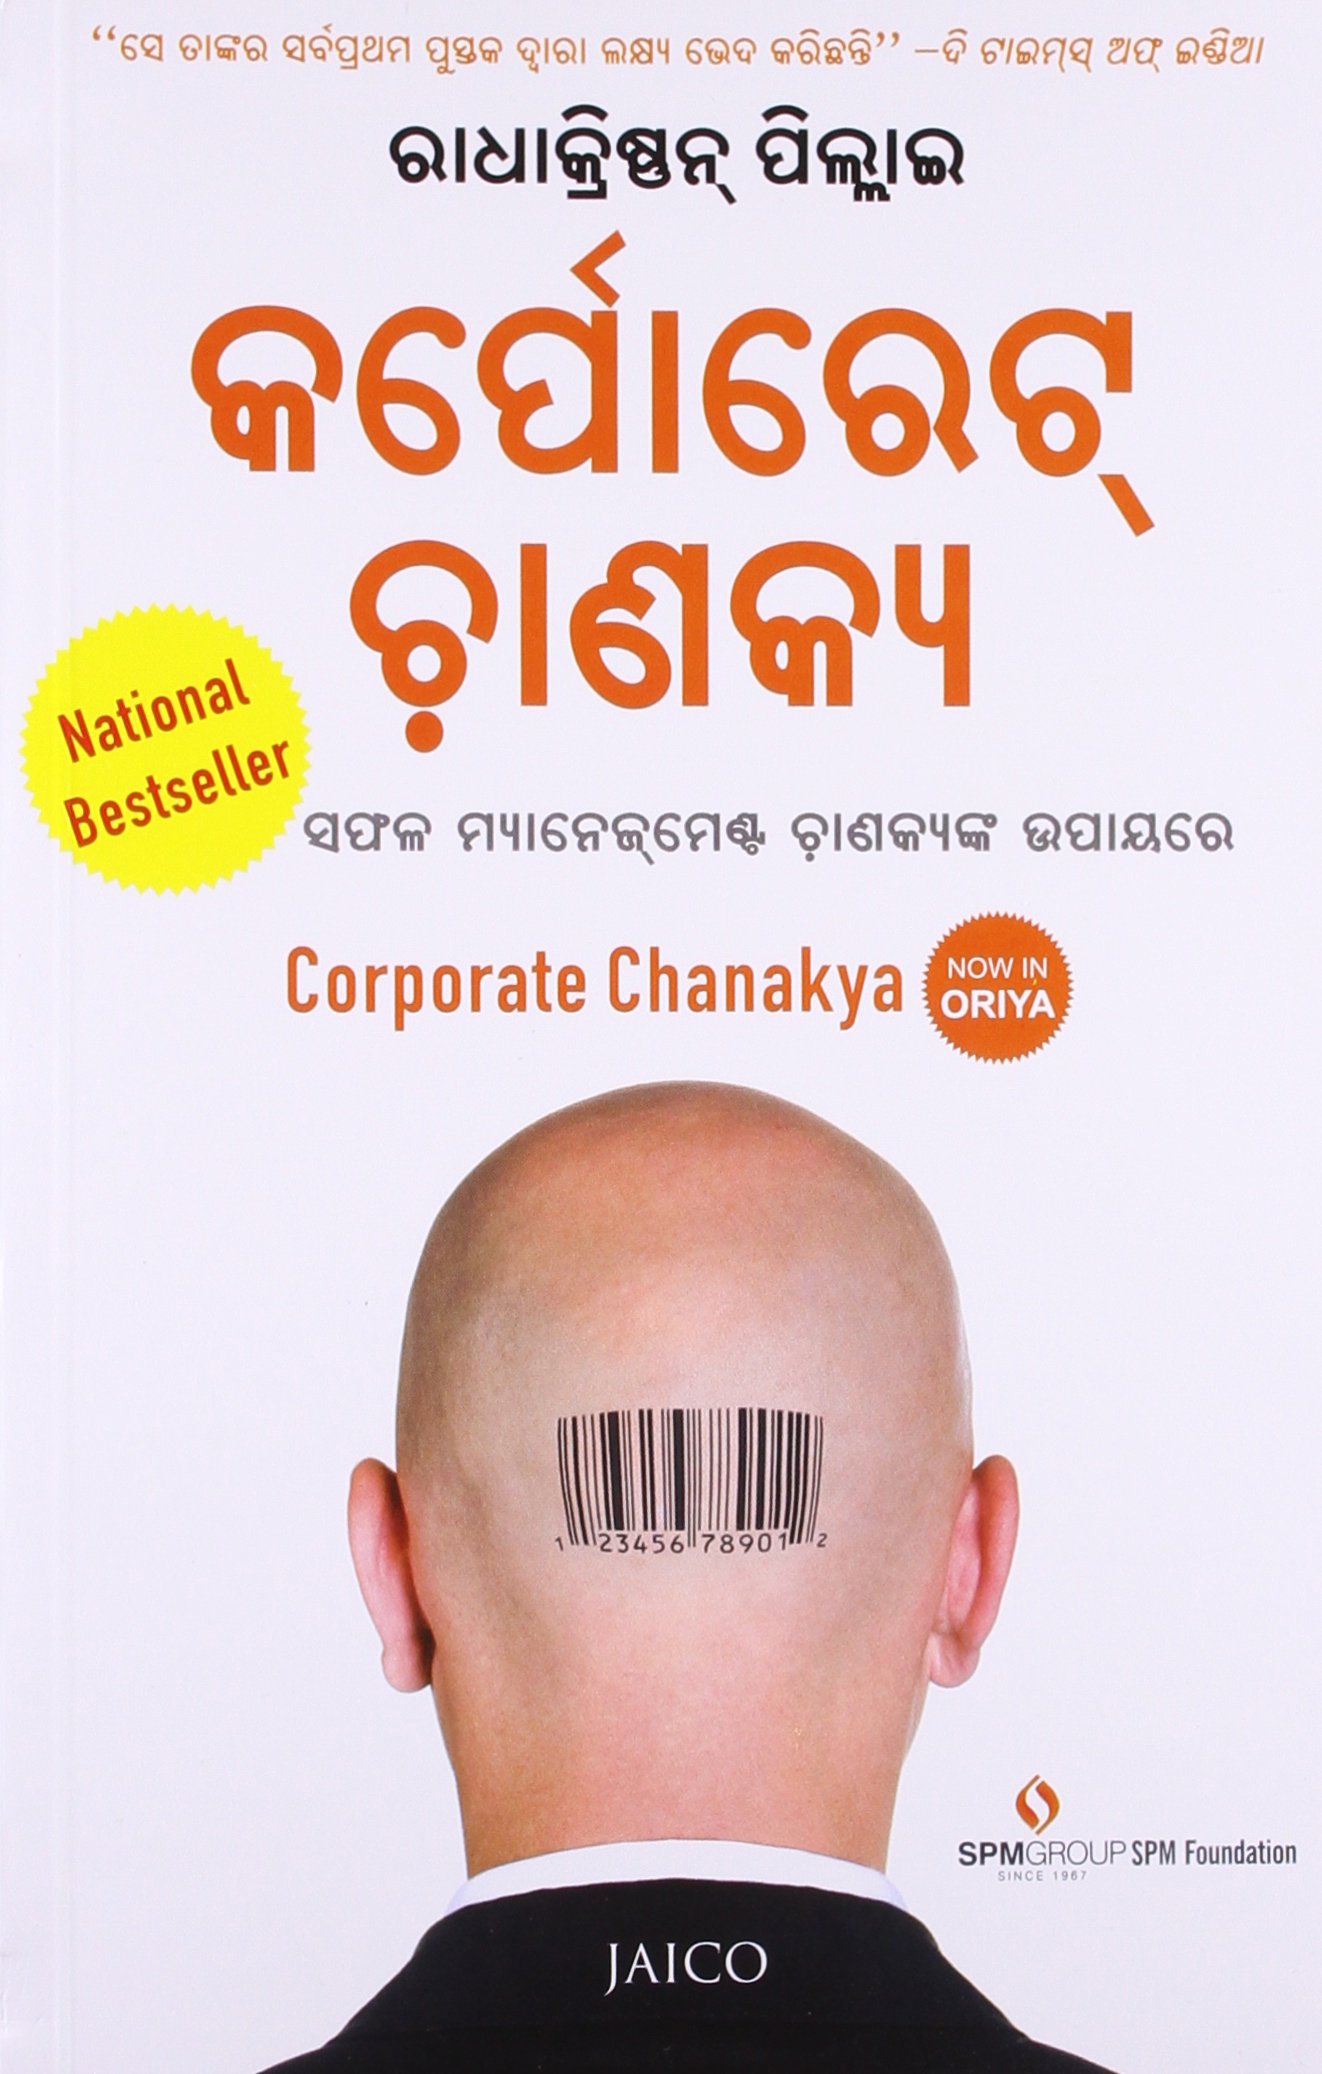 Corporate Chanakya (Oriya)